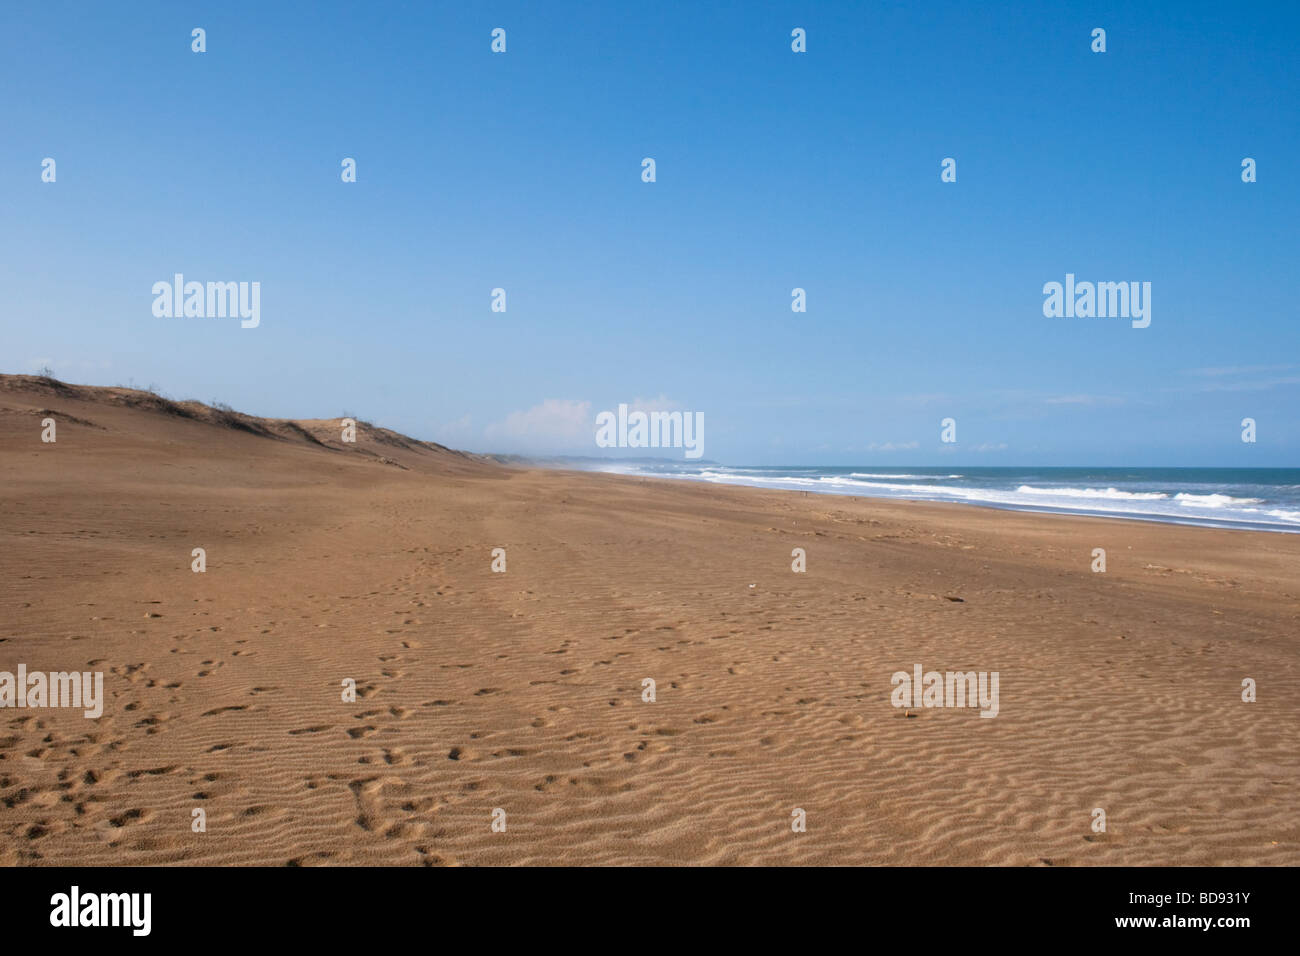 Unspoild Strand von Umlalazi in der Nähe von Mtunzini. Umlalazi Naturschutzgebiet, Kwazulu-Natal, Südafrika. Stockfoto